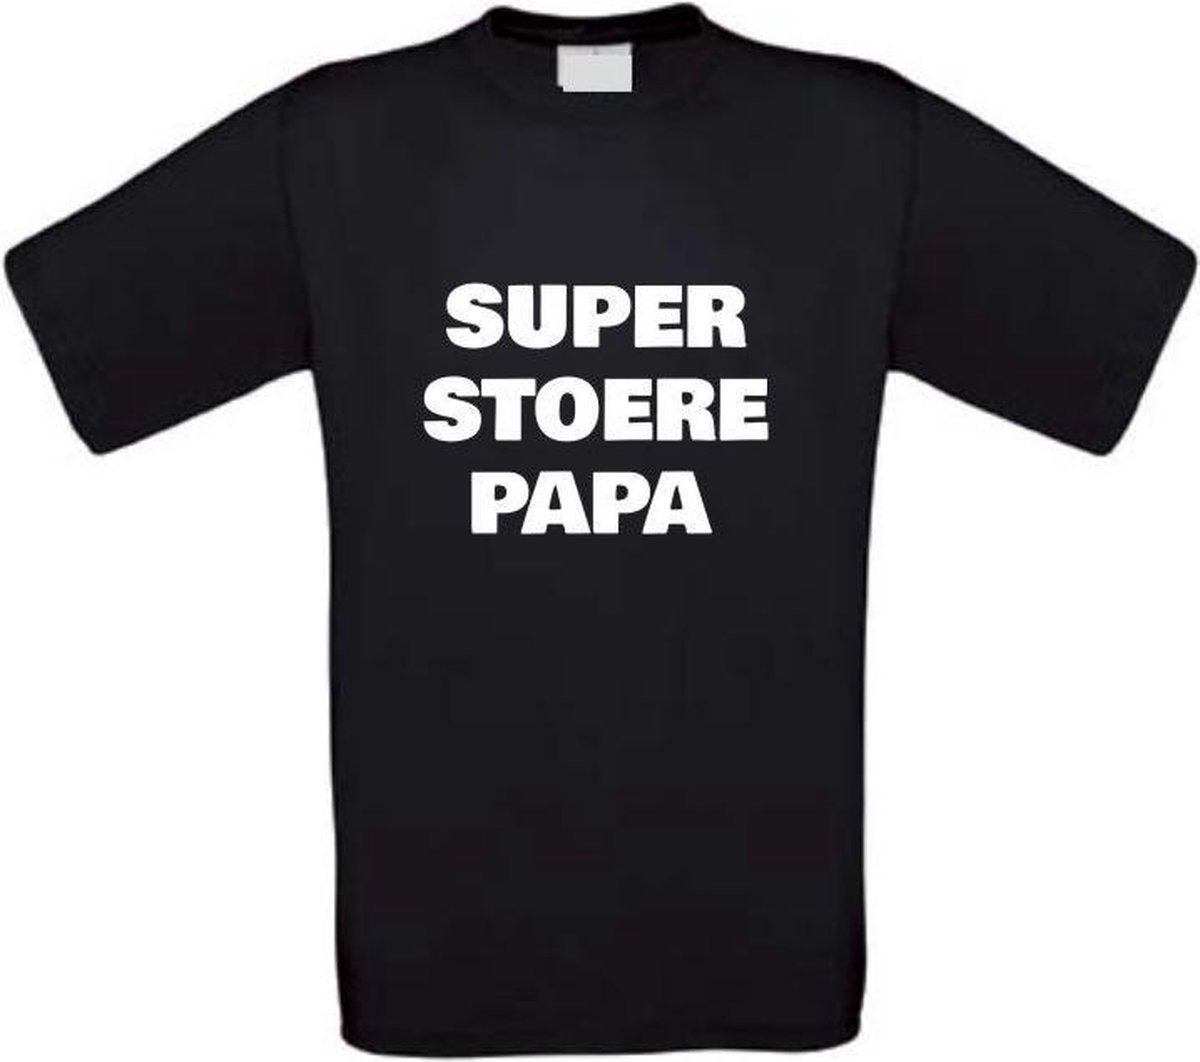 Super stoere papa T-shirt maat M zwart